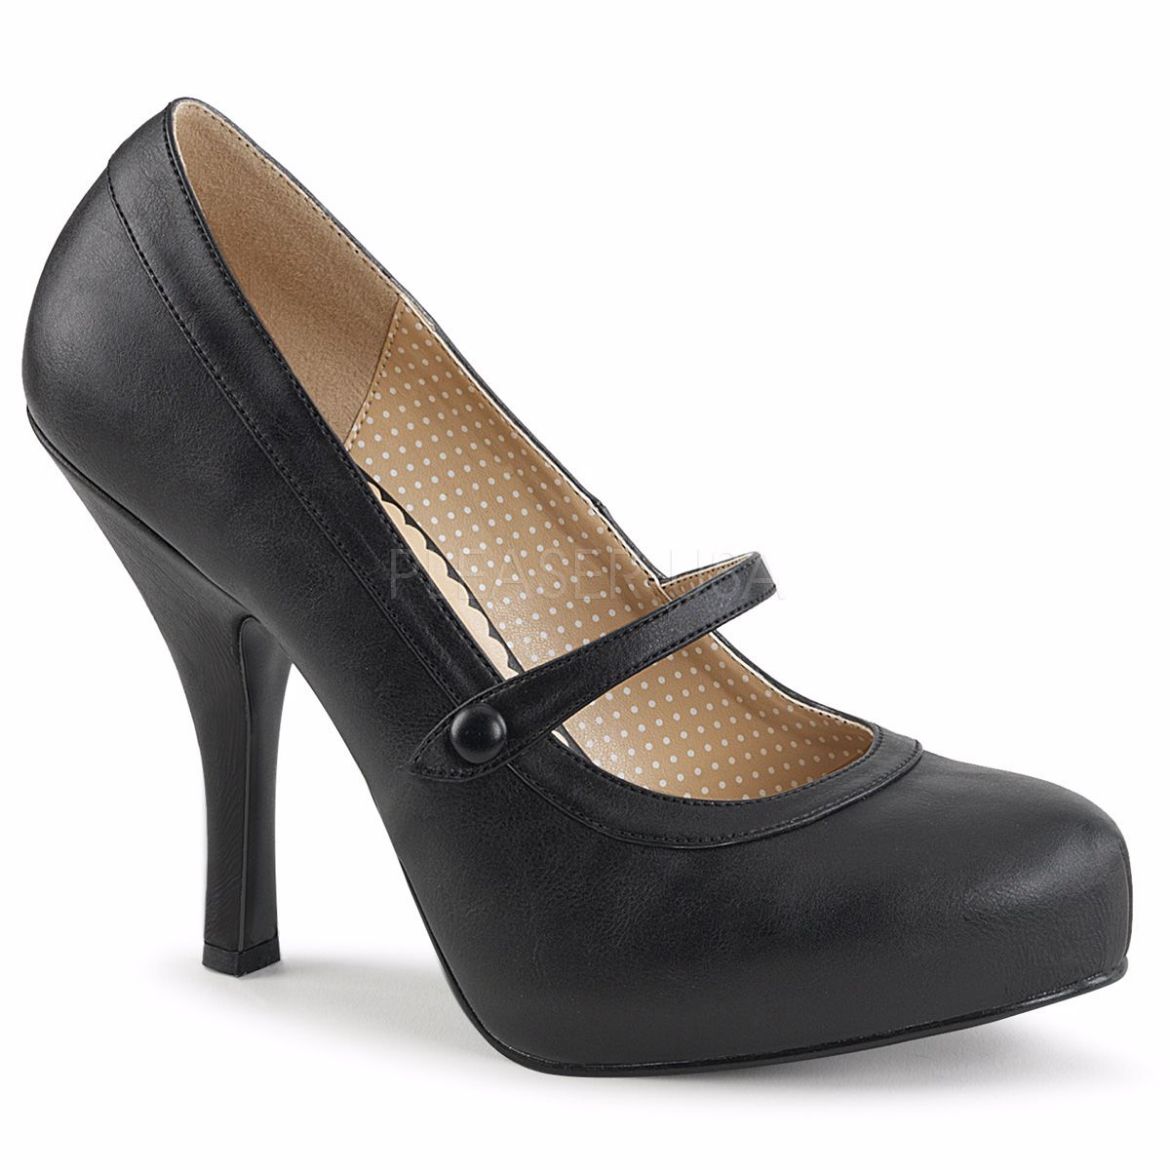 Product image of Pleaser Pink Label Pinup-01 Black Faux Leather, 4 1/2 inch (11.4 cm) Heel, 3/4 inch (1.9 cm) Platform Court Pump Shoes